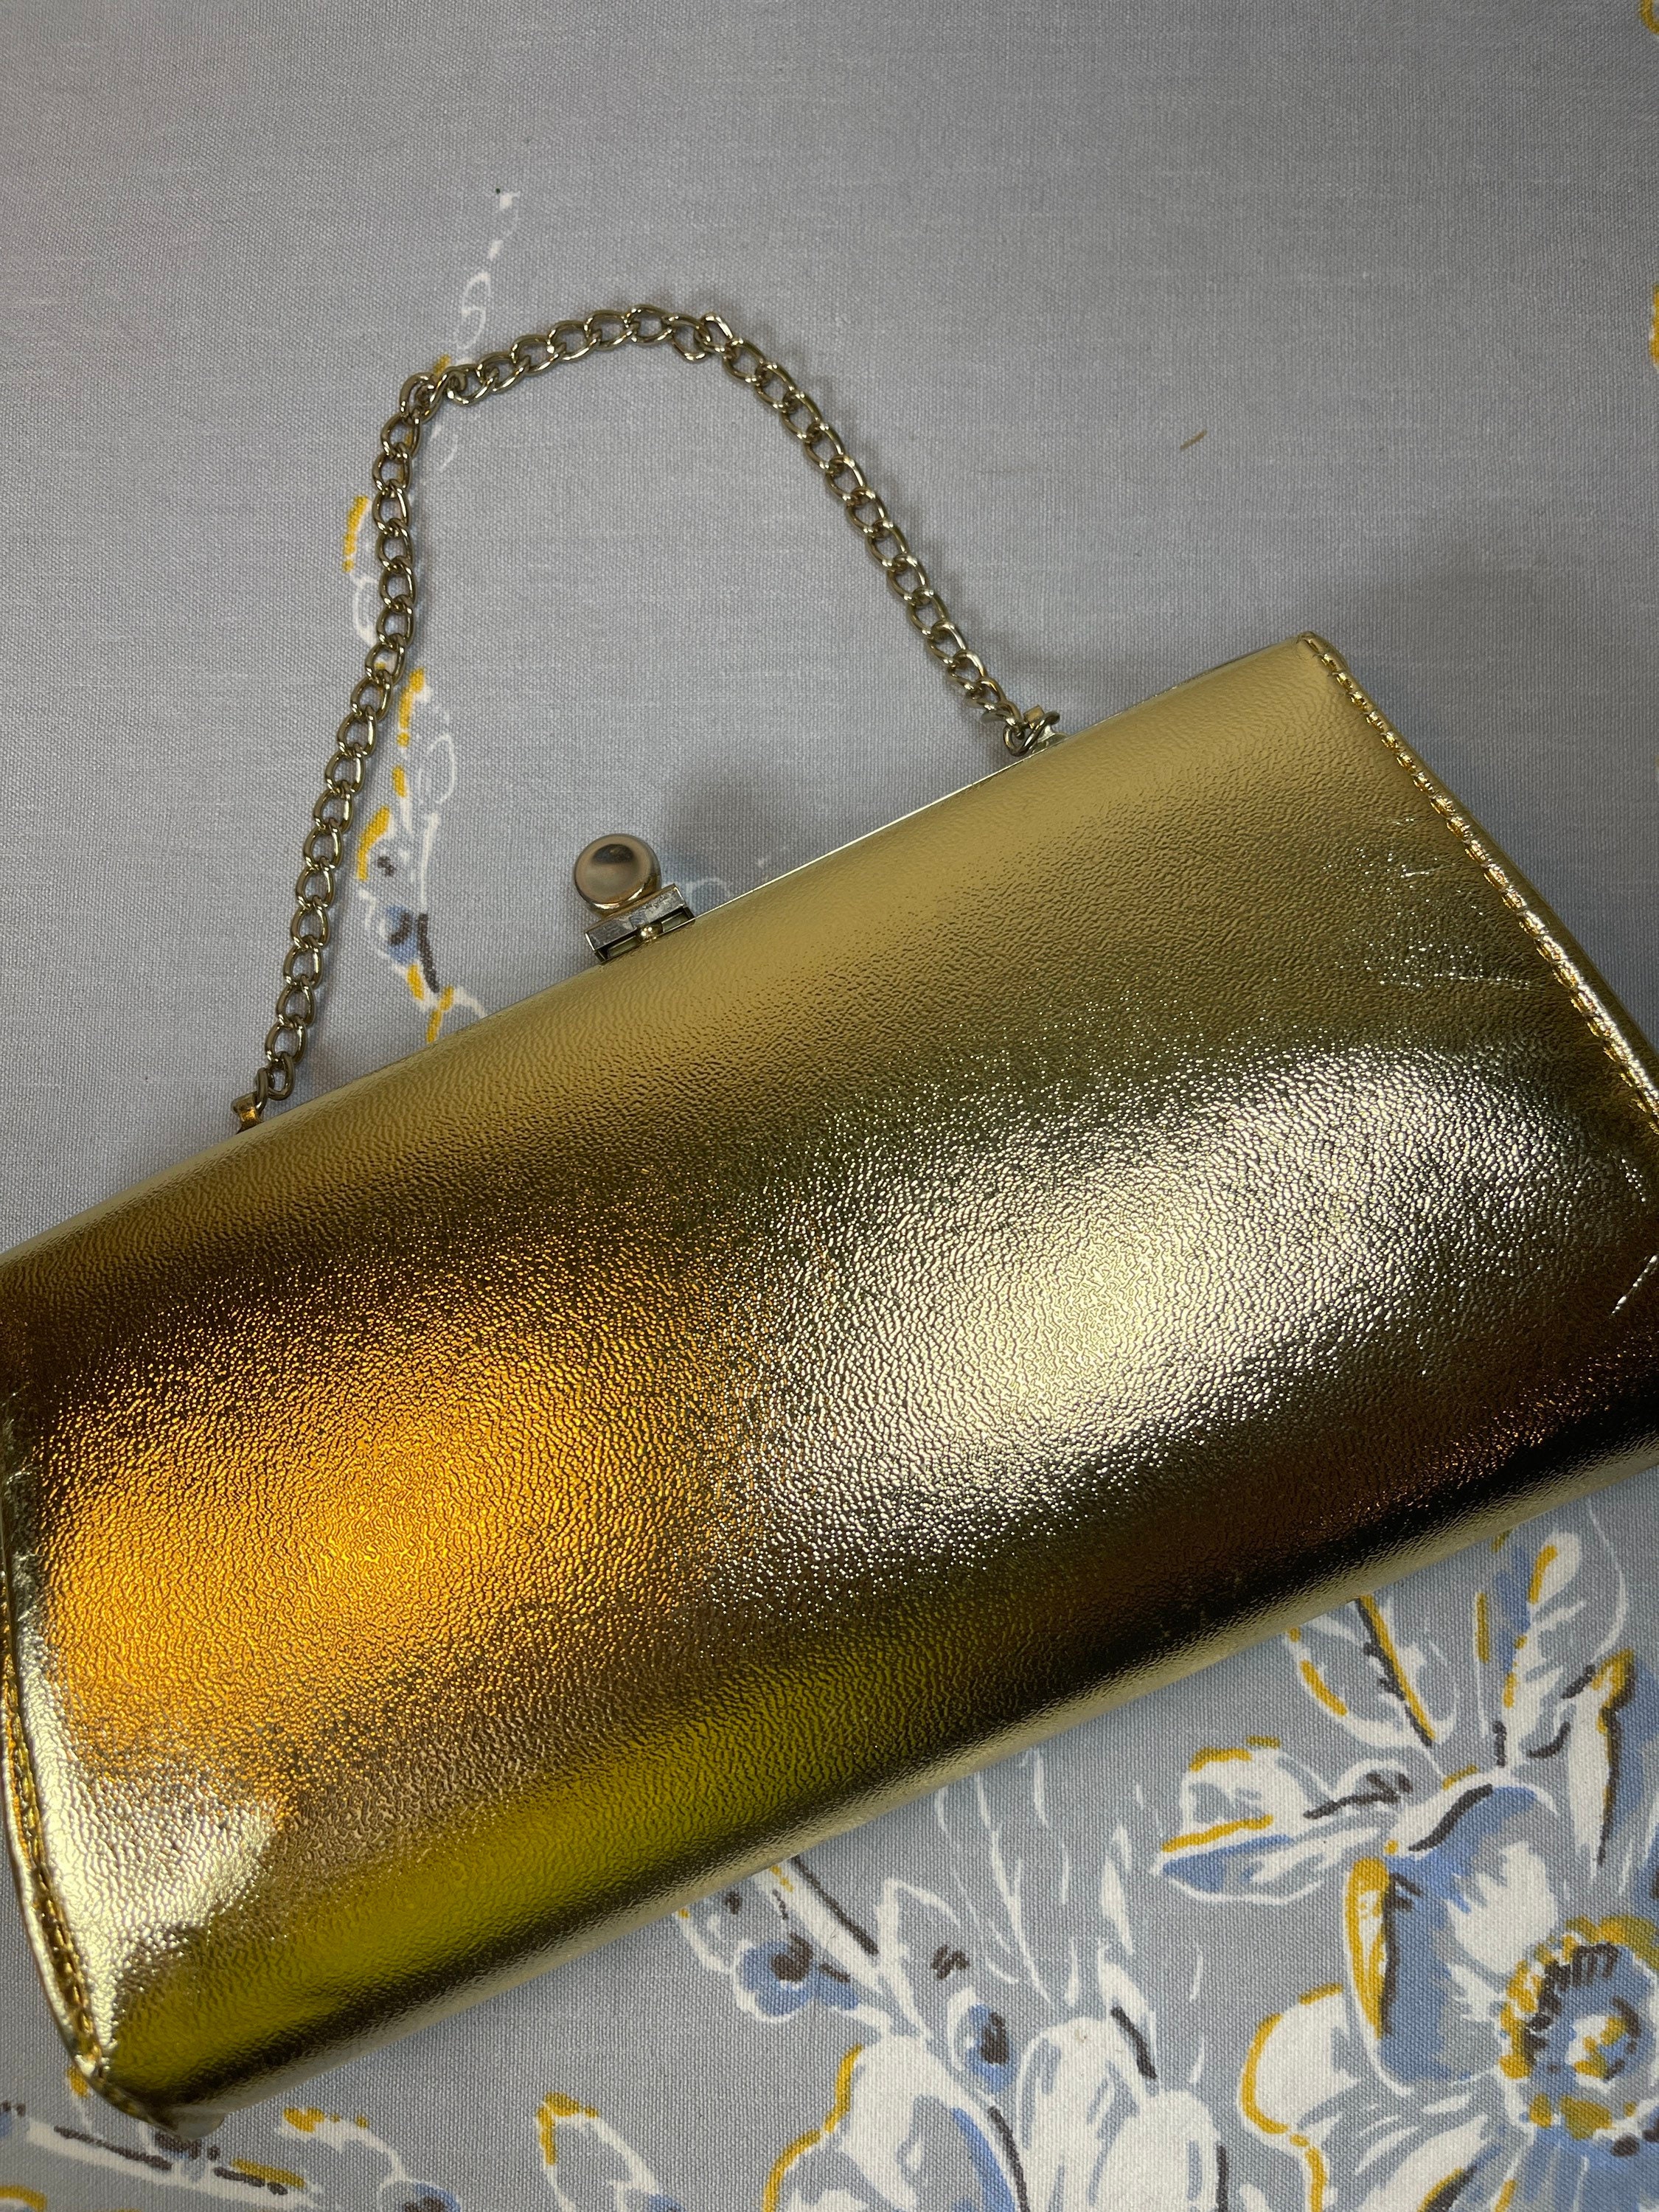 Vintage Shiny Metallic Gold Clutch Purse Handbag - Kitschy Retro Mid-Century - Formal Party Wedding Prom Christmas New Years Quinceanera